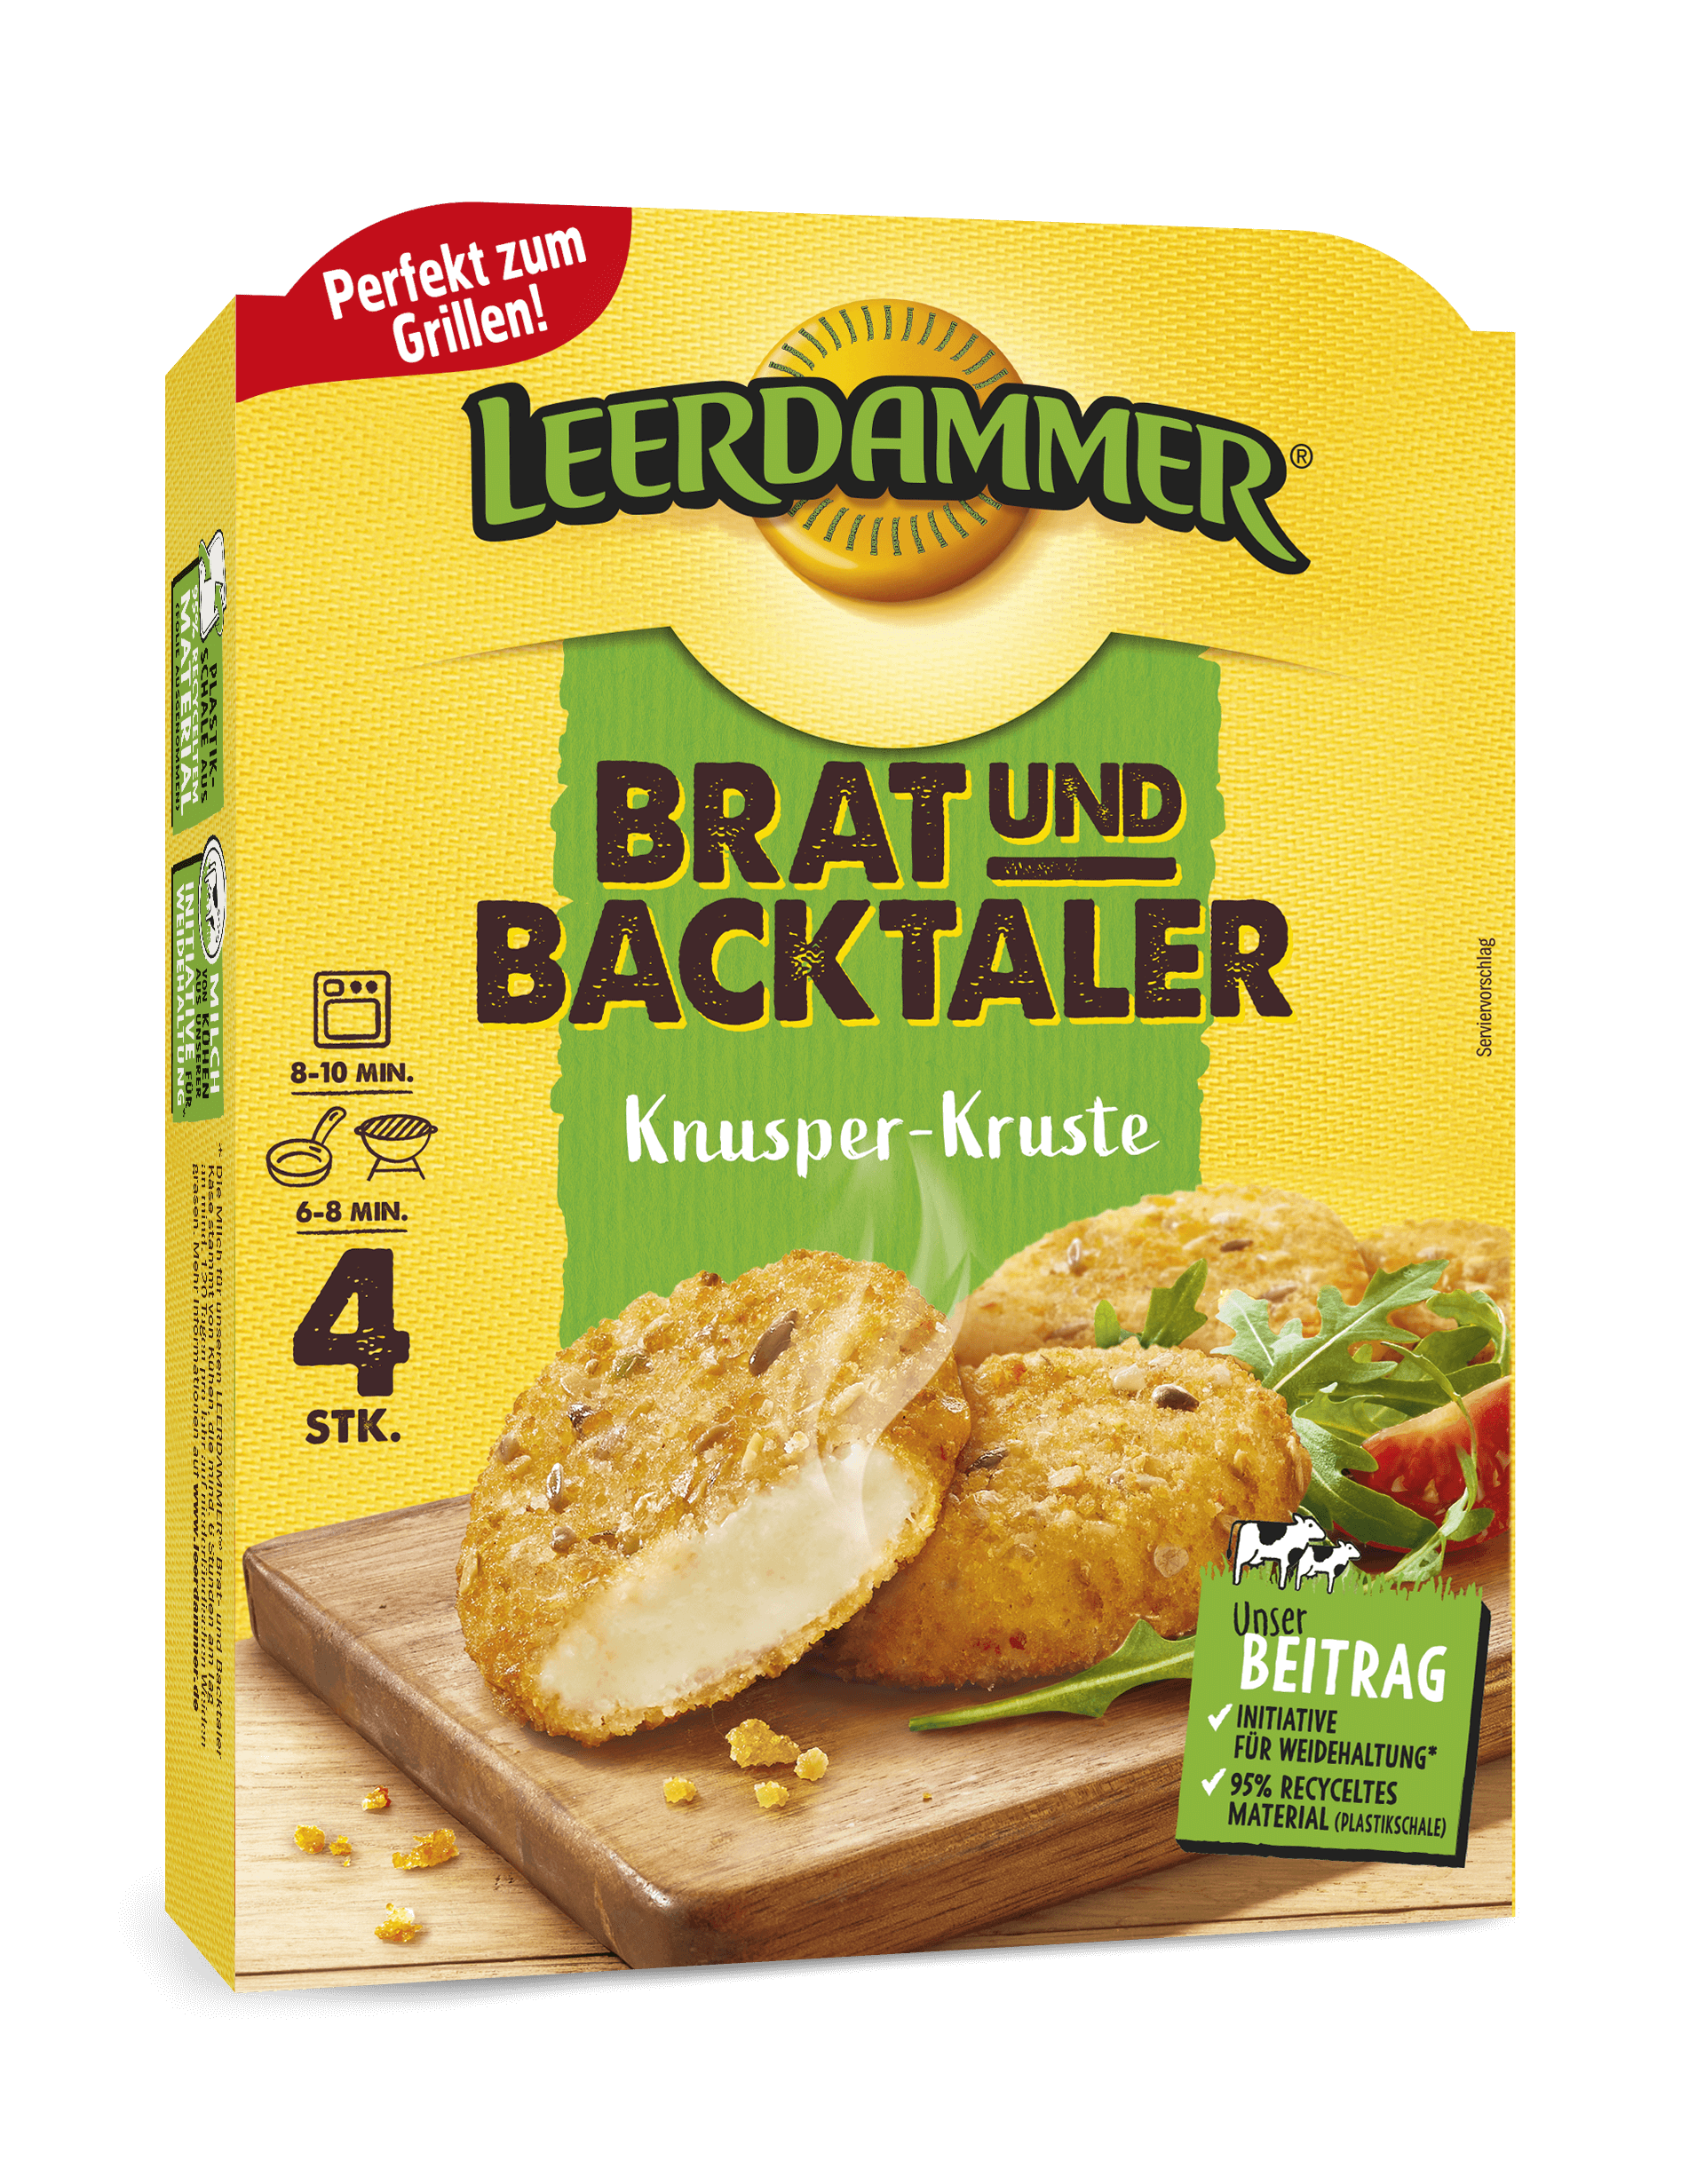 Produkt Brat- und Backtaler Knusper-Kruste  Neu